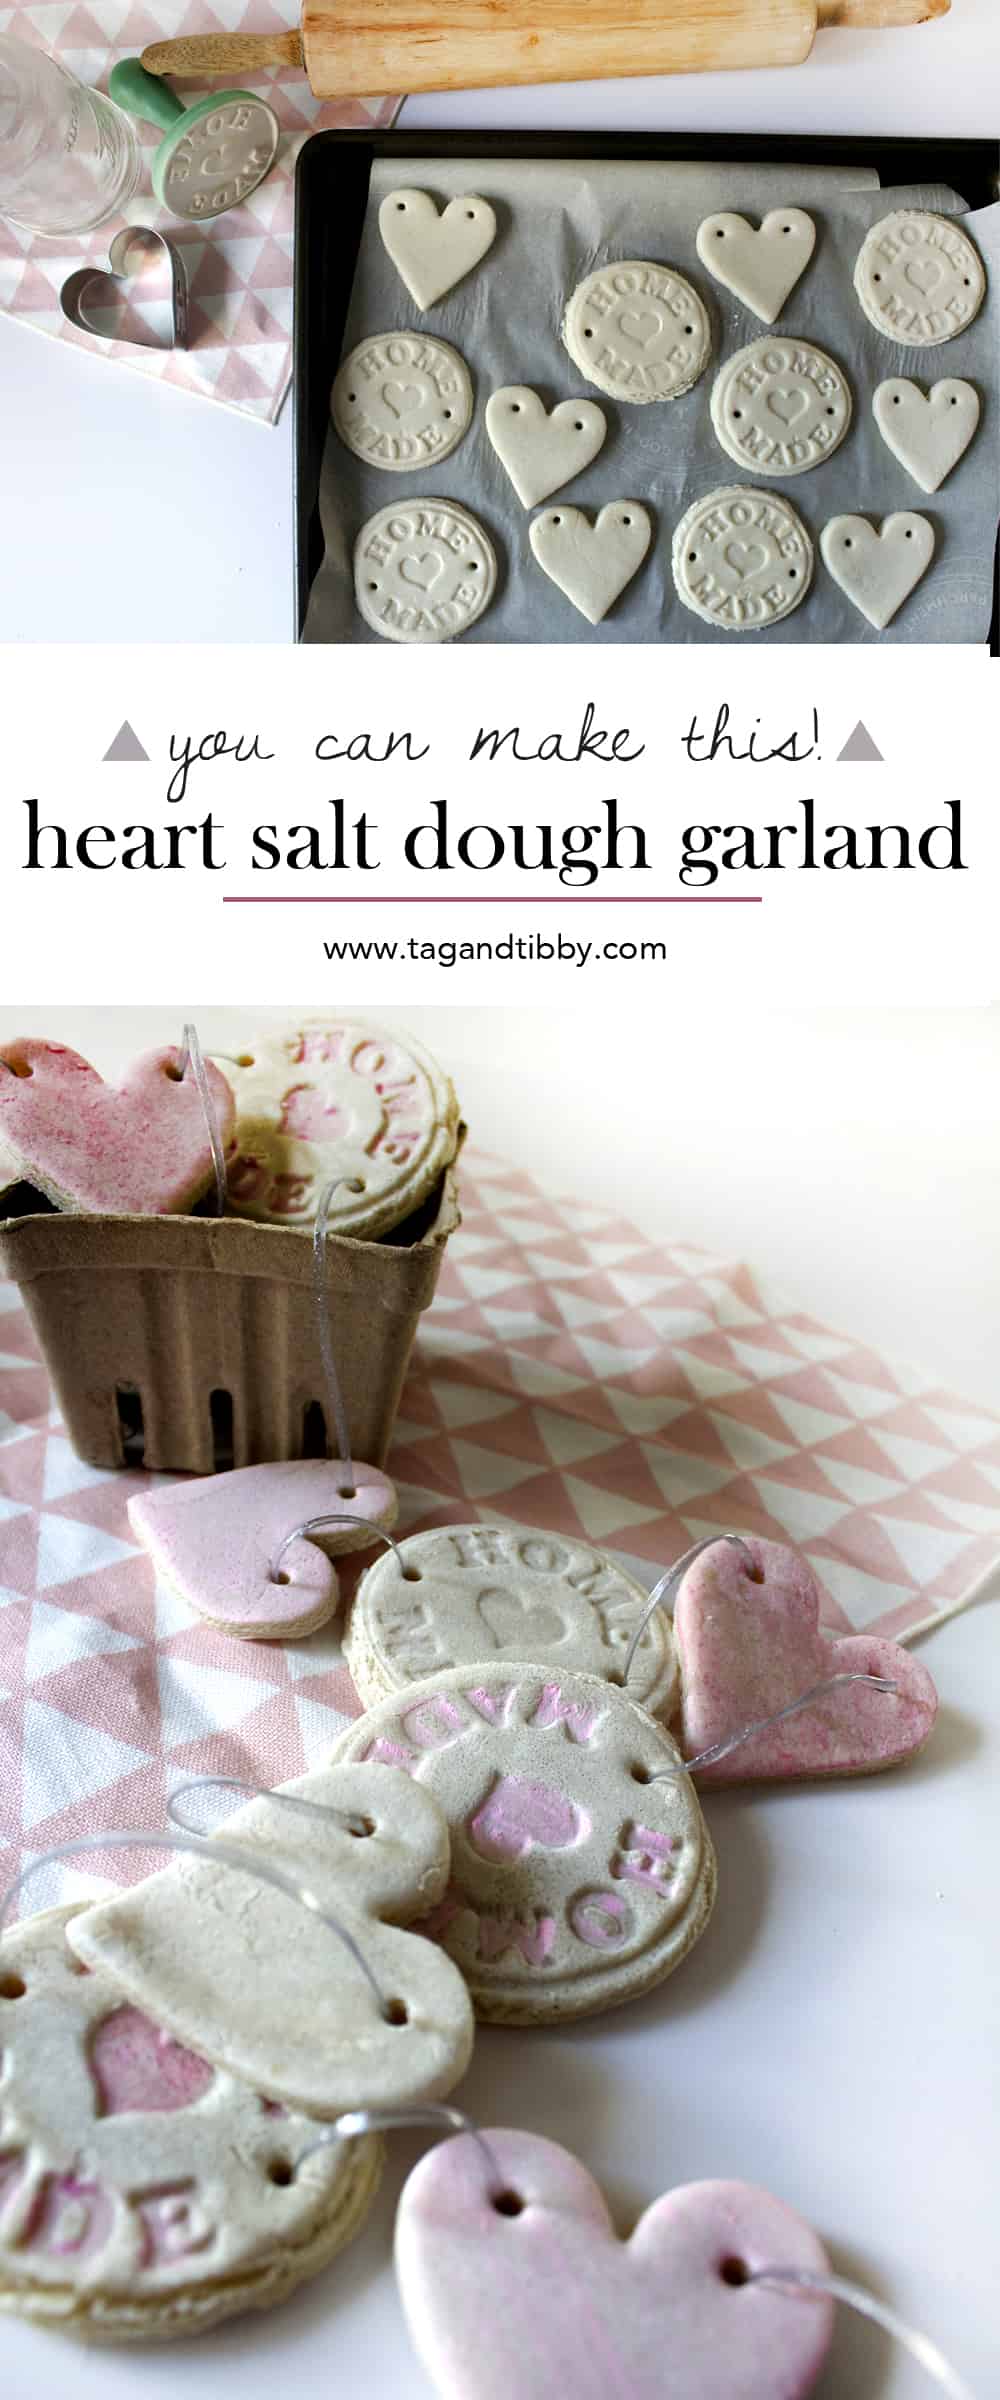 salt dough garland with hearts